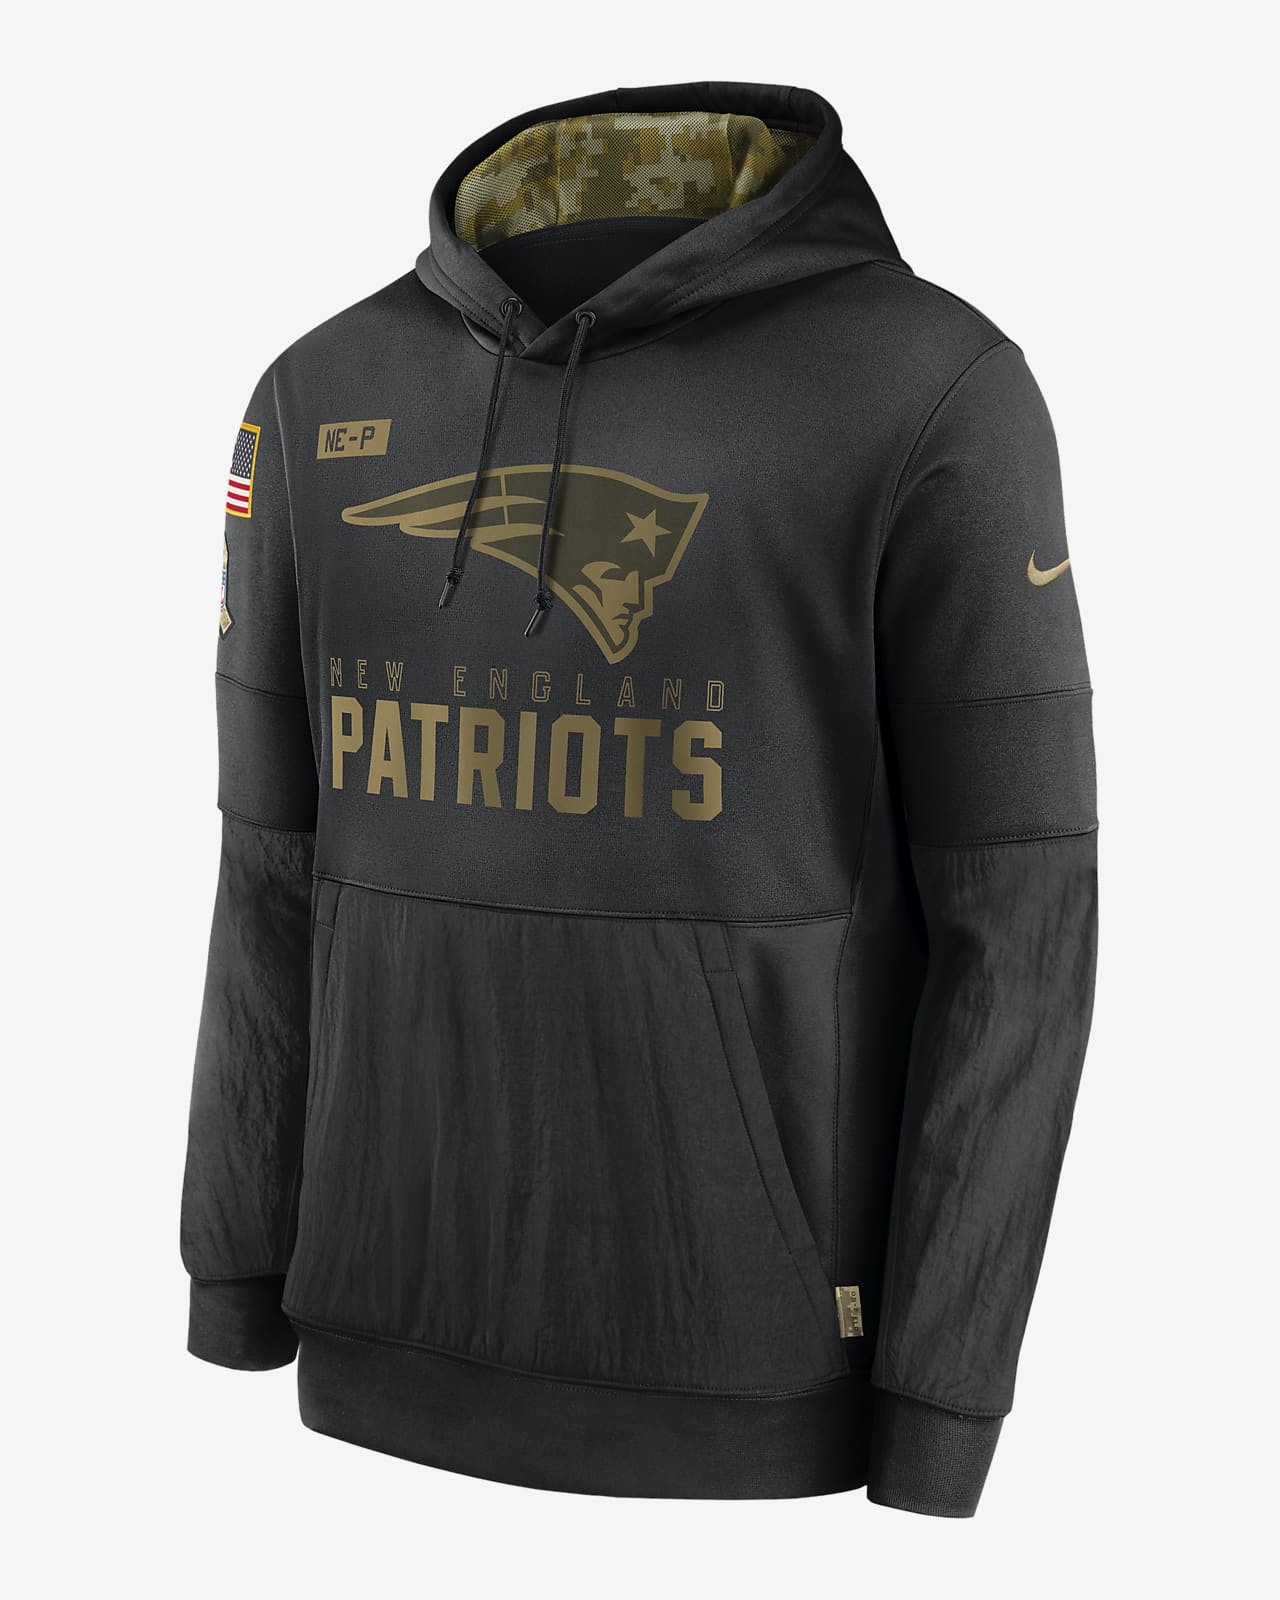 AJh,nfl patriots military hoodie 